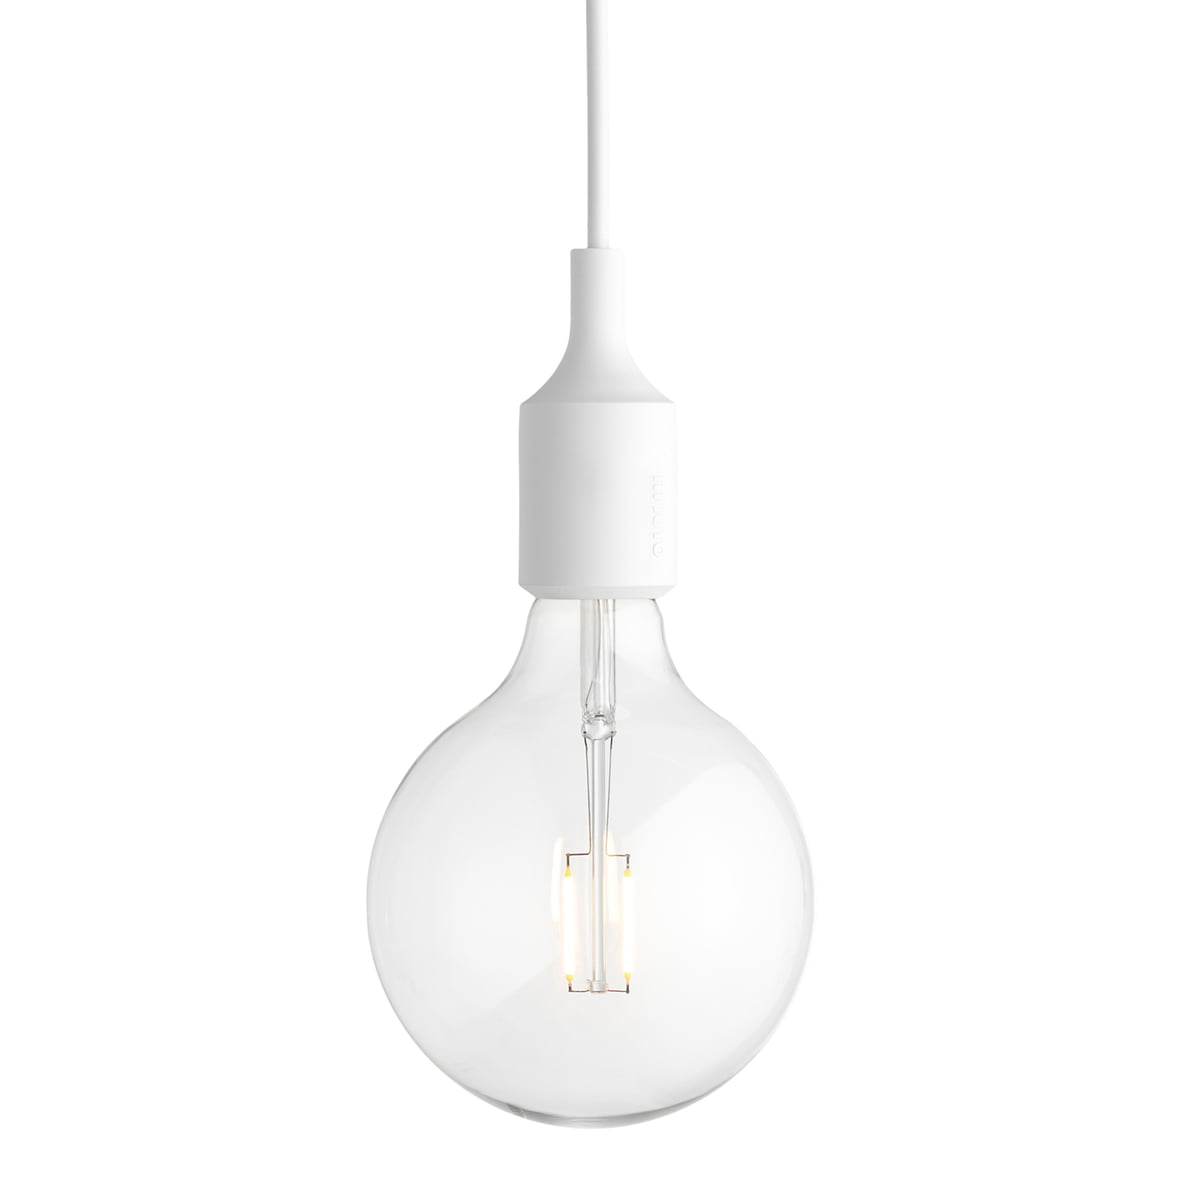 Mona Lisa Corporation pion Muuto - Hanglamp E27-fitting LED | Connox